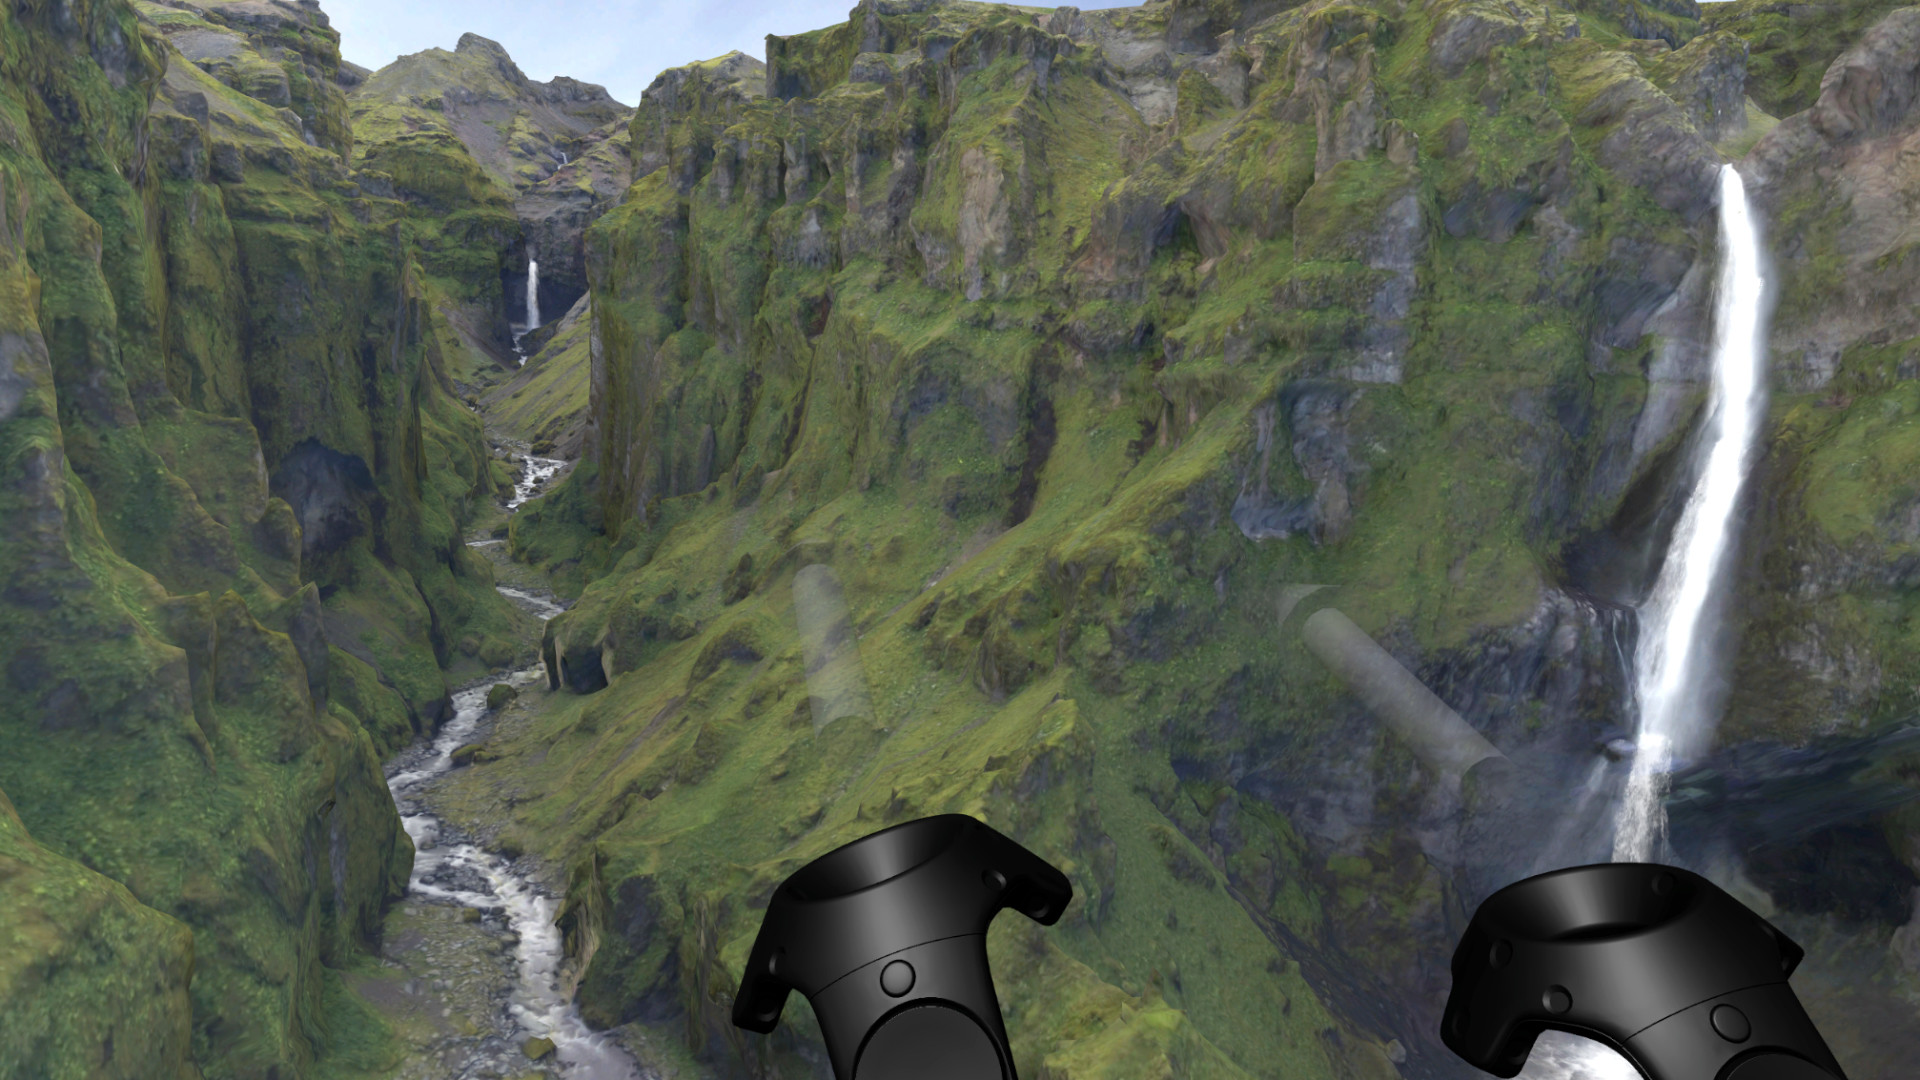 Oculus Quest 游戏《蓝色星球VR》Blueplanet VR Explore